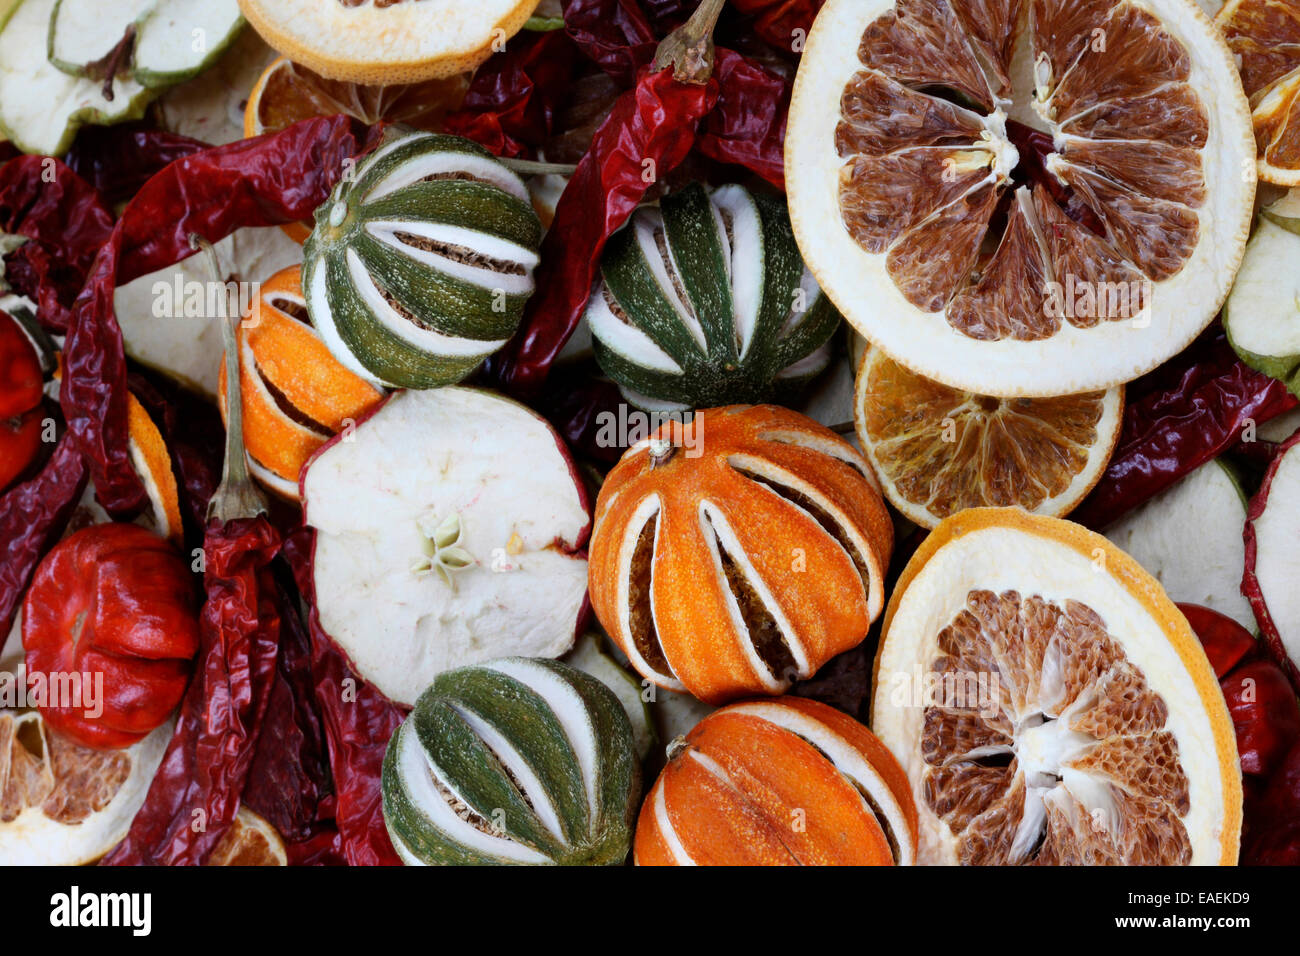 dried limes, apples, oranges, peppers, lemons a pot pouri of festive fruit Jane Ann Butler Photography JABP1099 Stock Photo